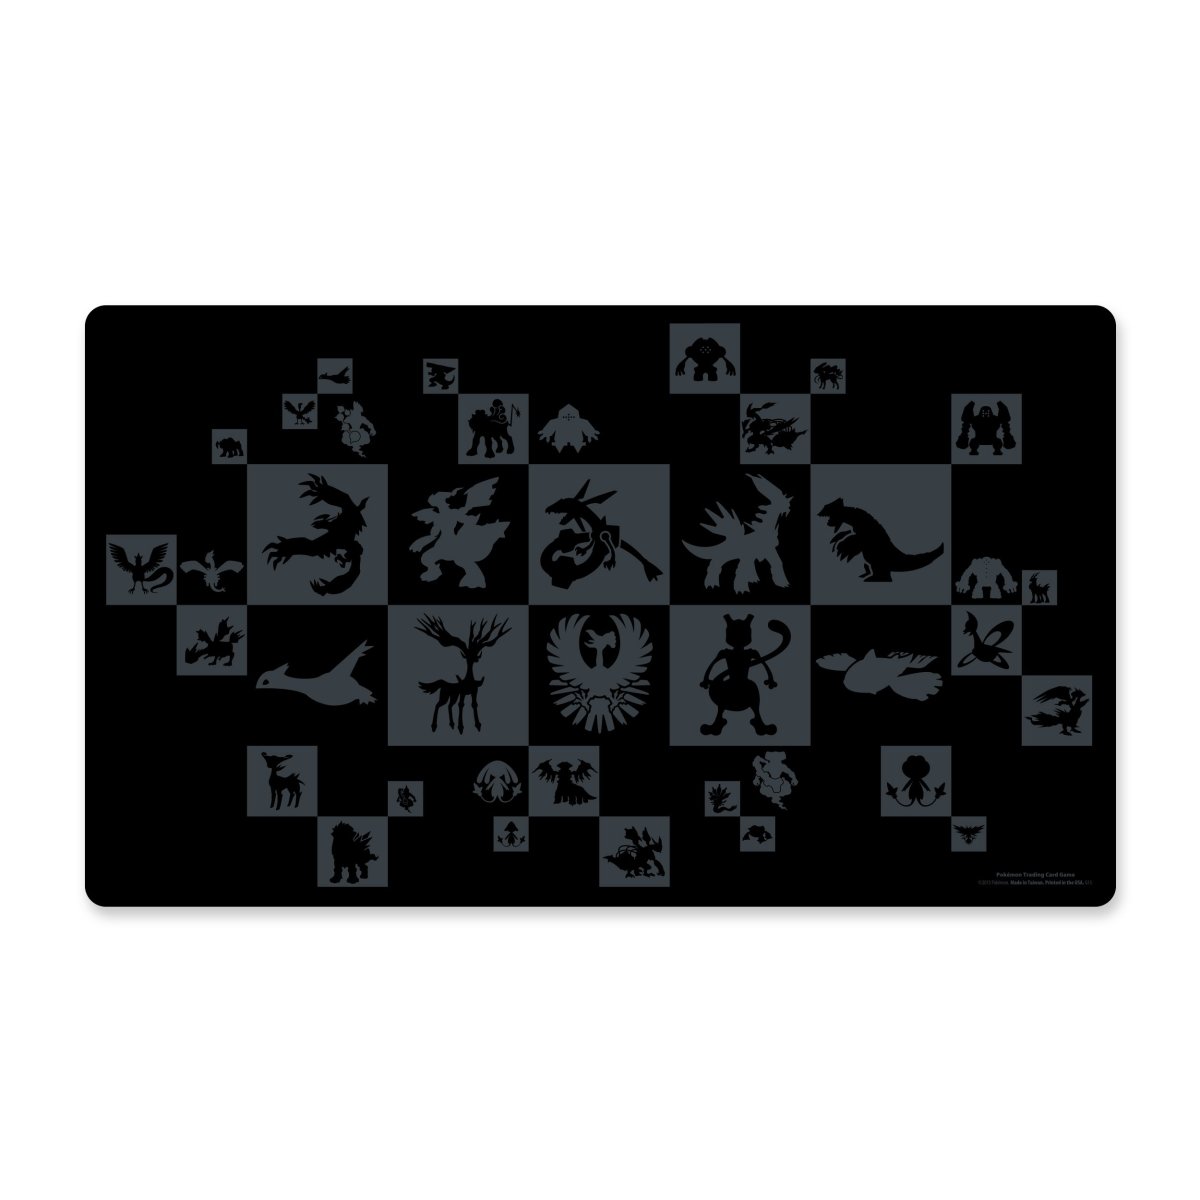 Legendary Pokémon Pattern Trading Card Game Playmat